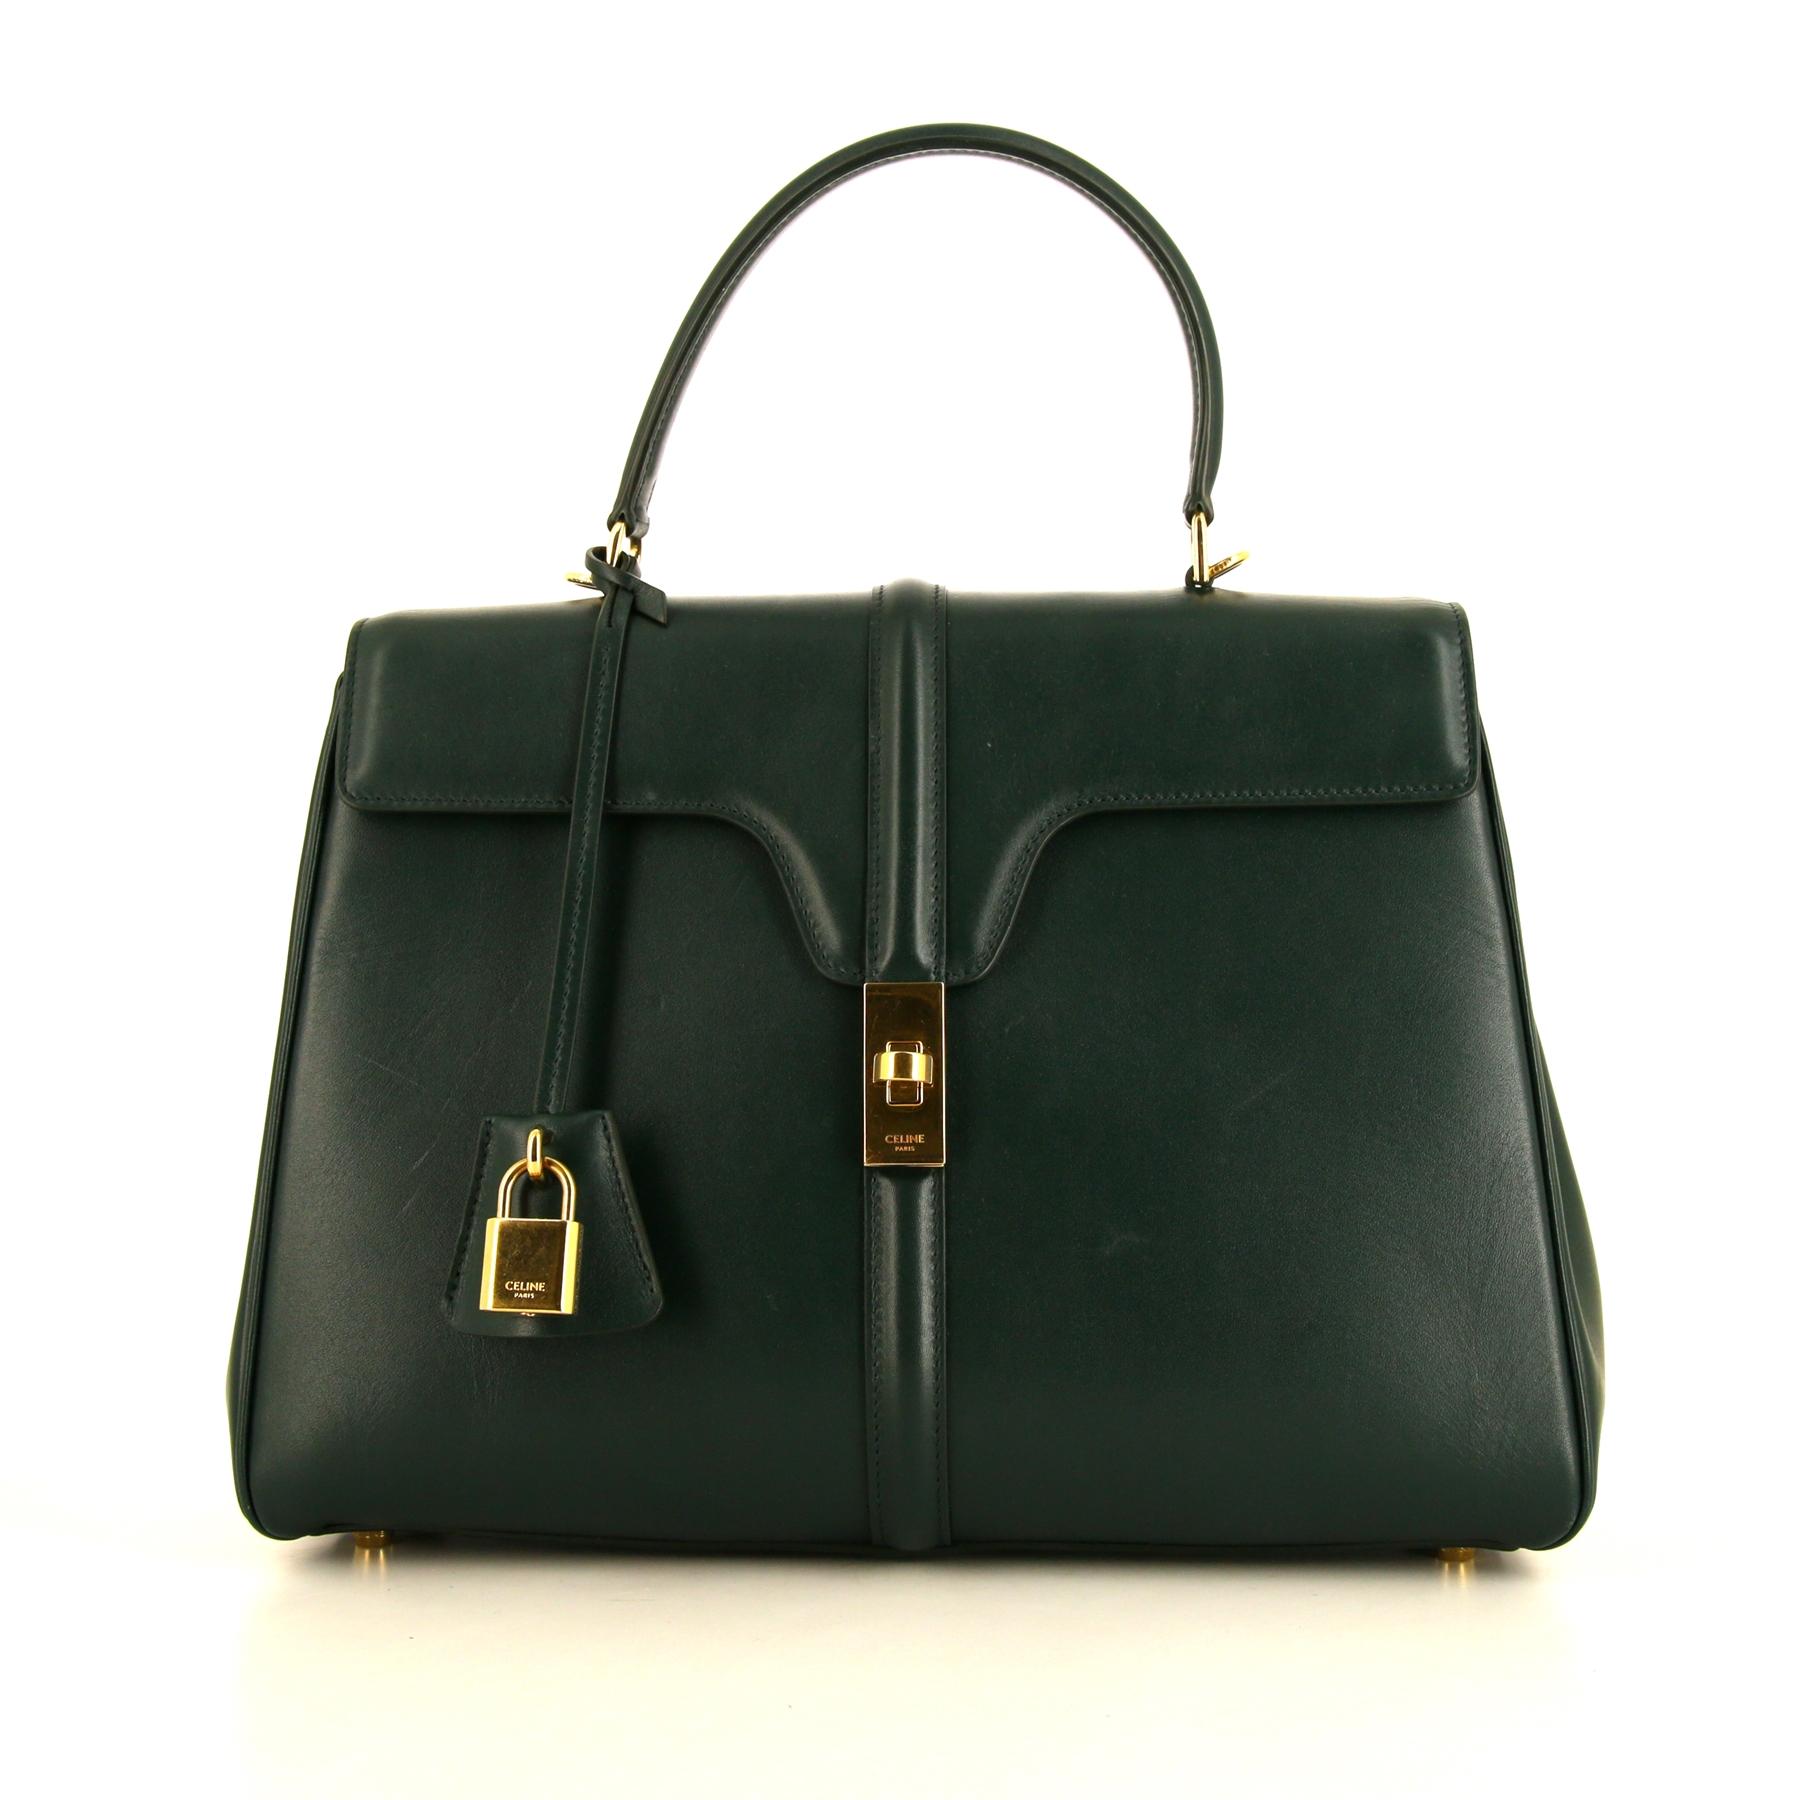 16 Handbag In Green Leather